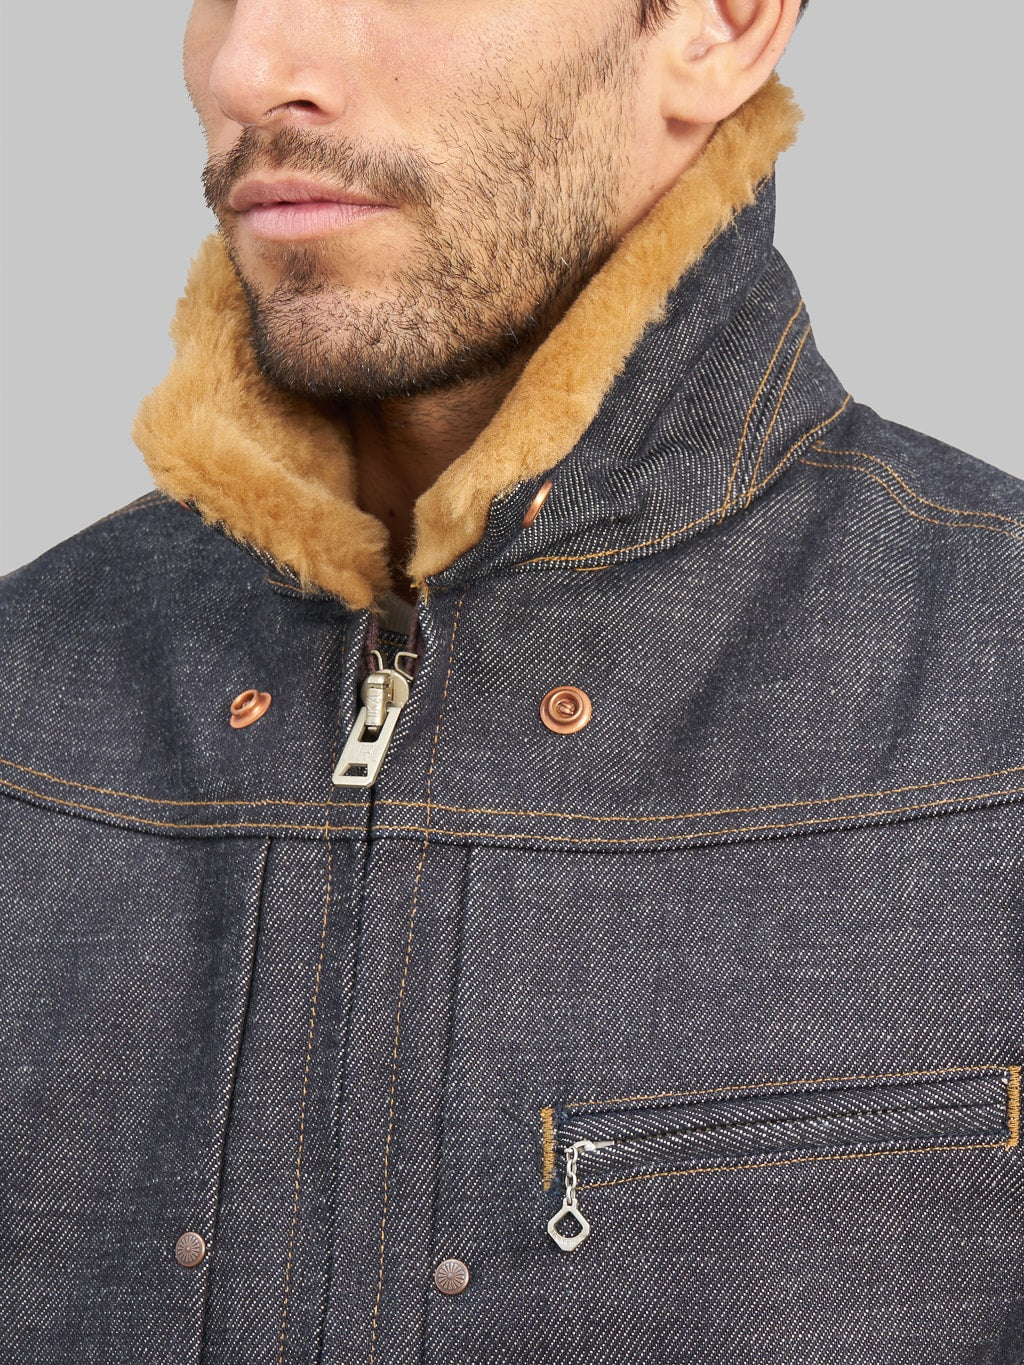 Freenote Cloth Denim Shearling Jacket lining collar buttons